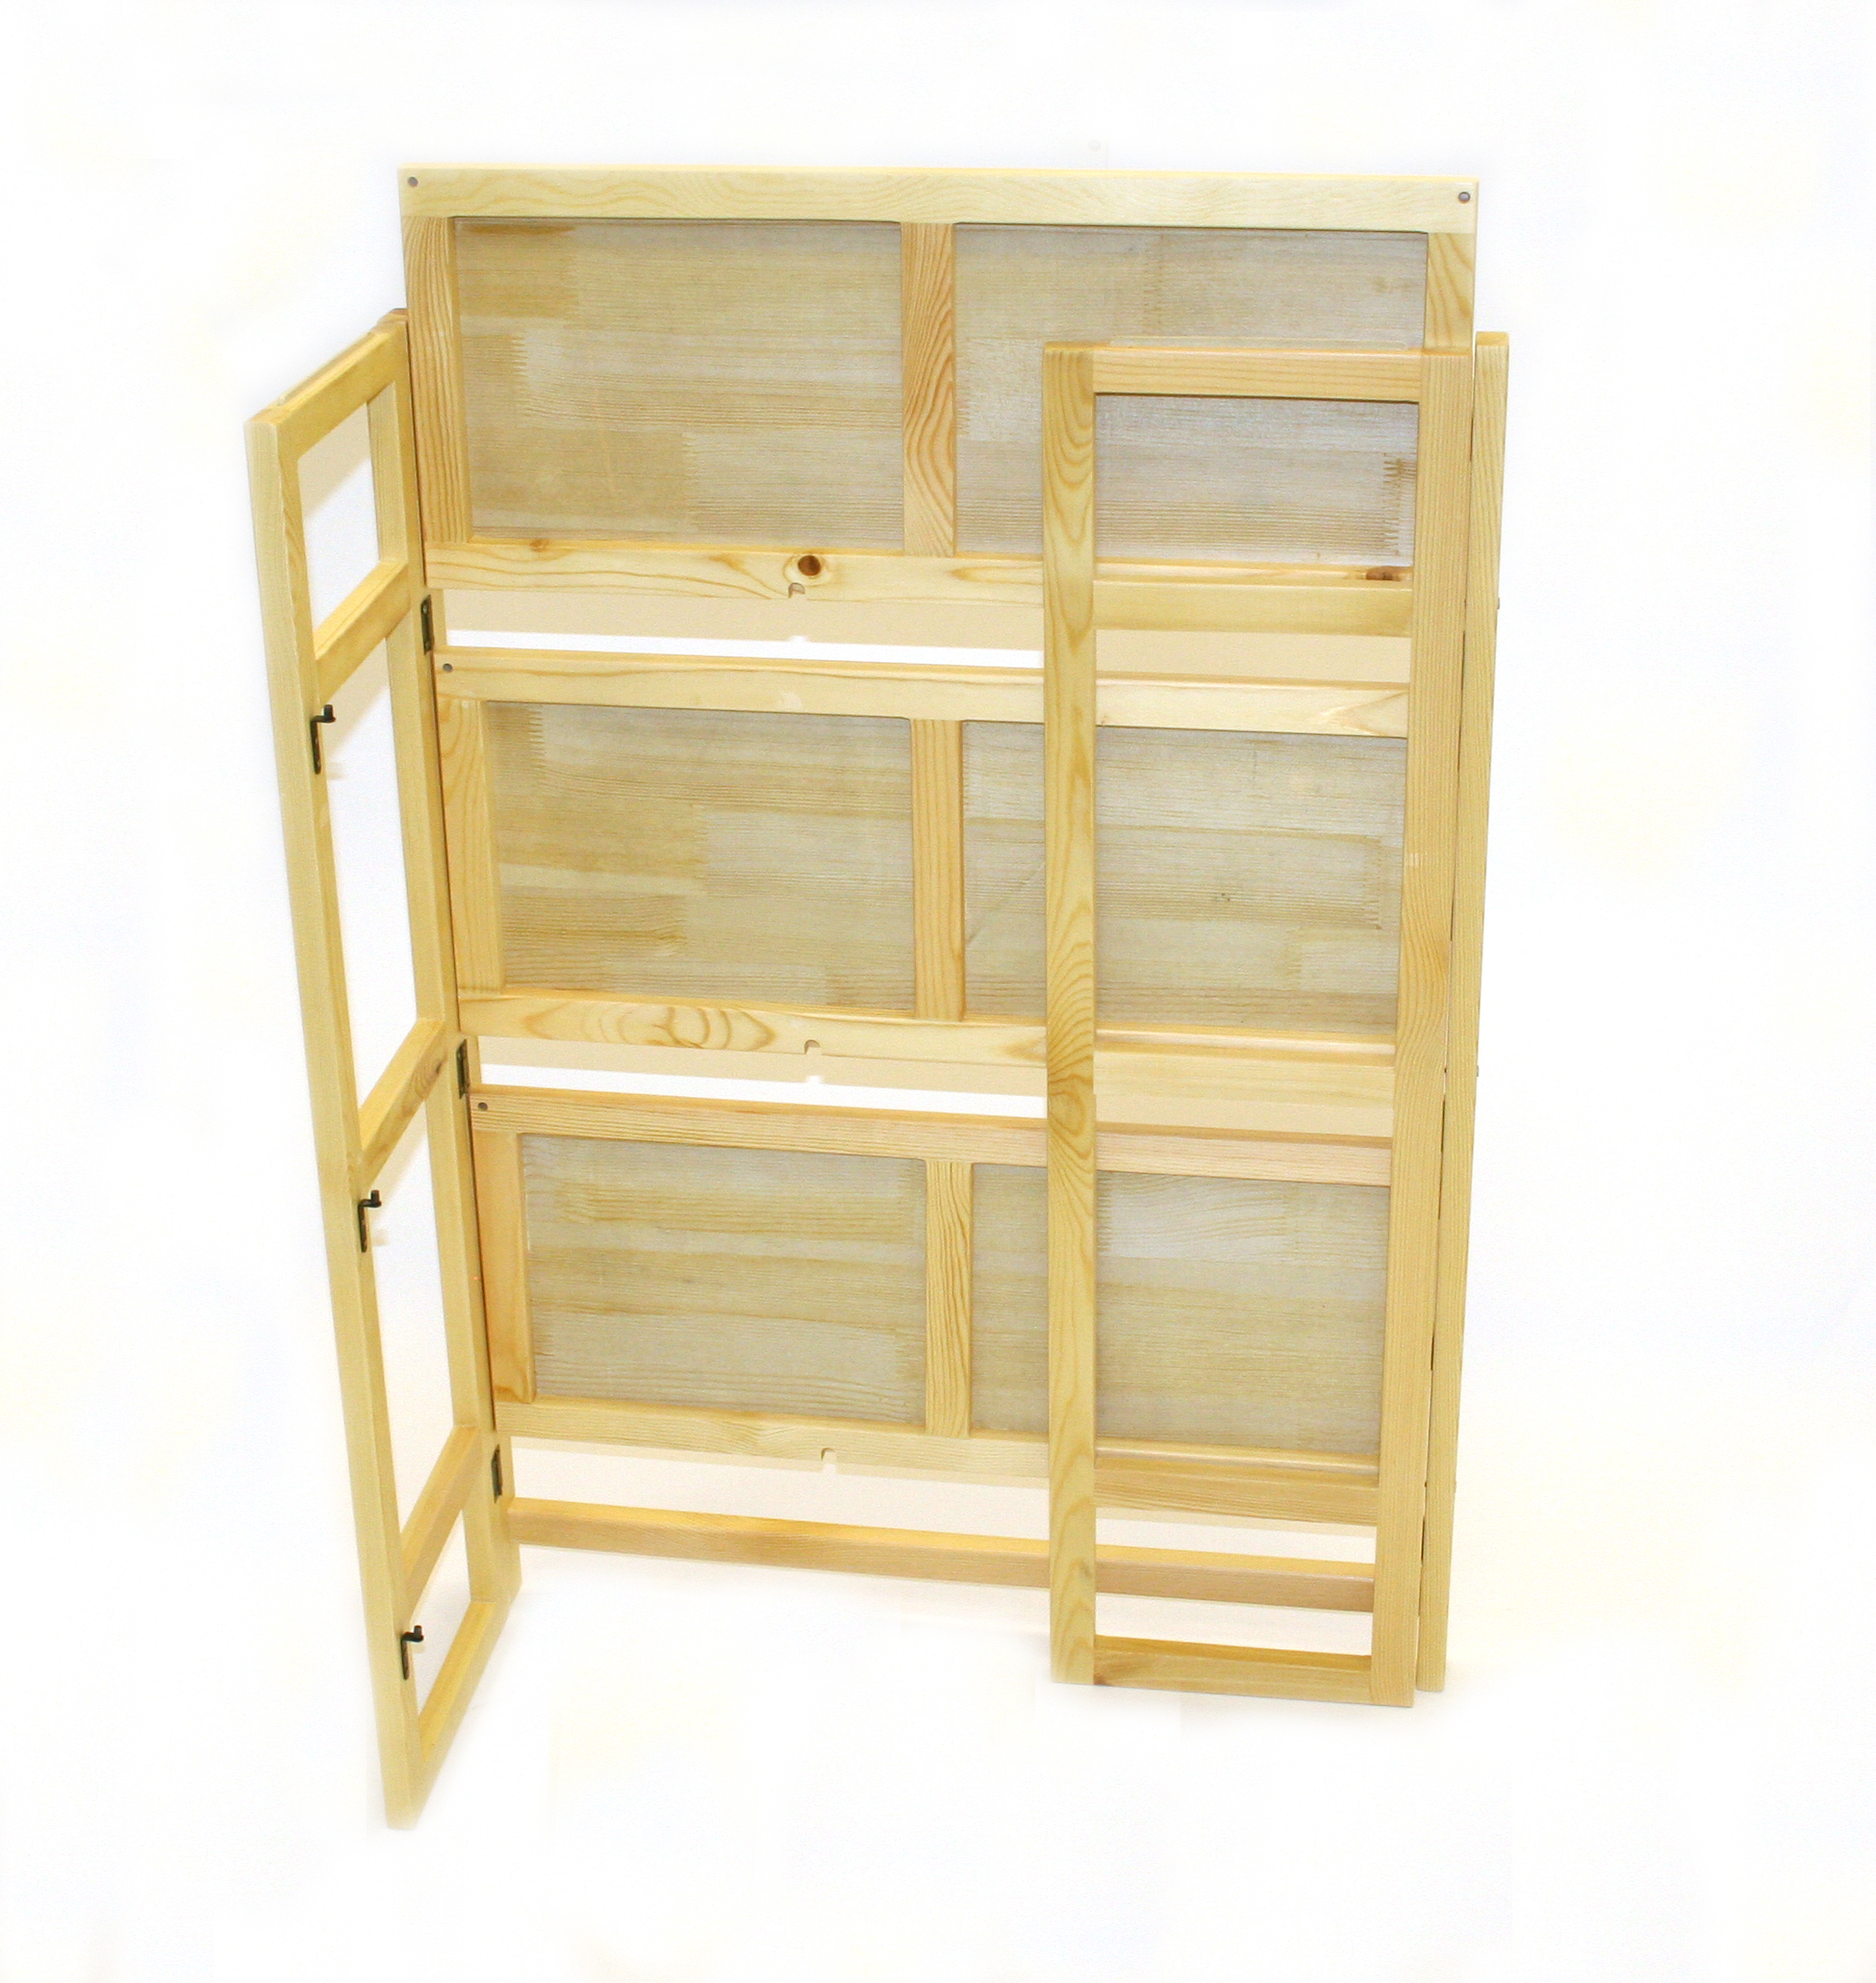 Stacking Wooden Book Shelves 3 Tier, Folding Wooden Shelves